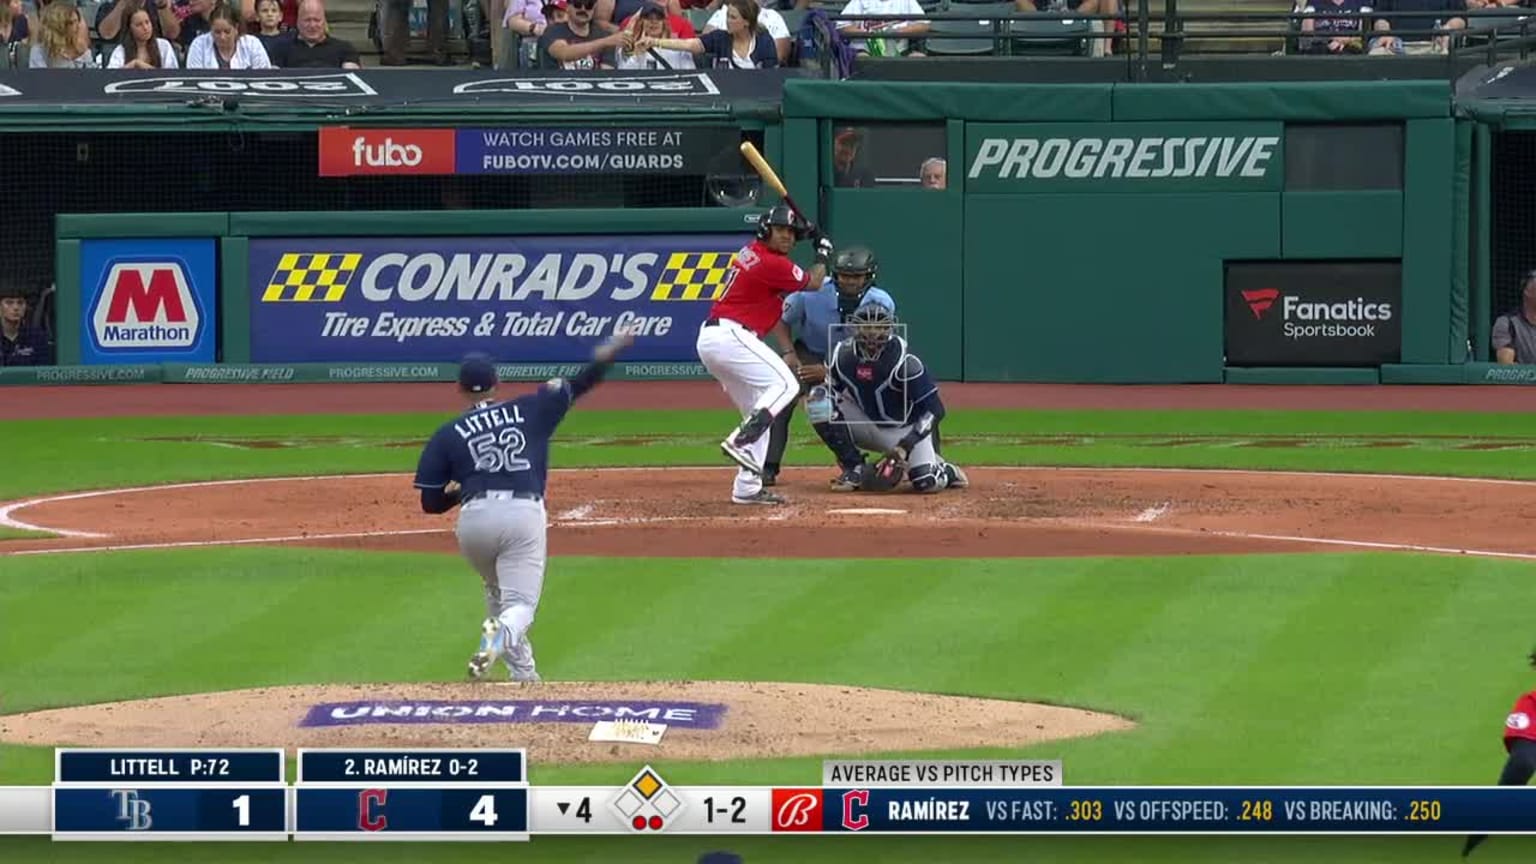 Jose Ramirez Shirt - Home Run Pitch, Cleveland - BreakingT